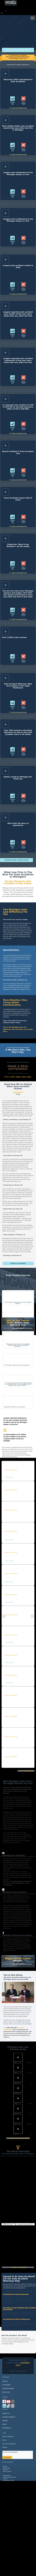 Michigan Auto Law - Detroit MI Lawyers